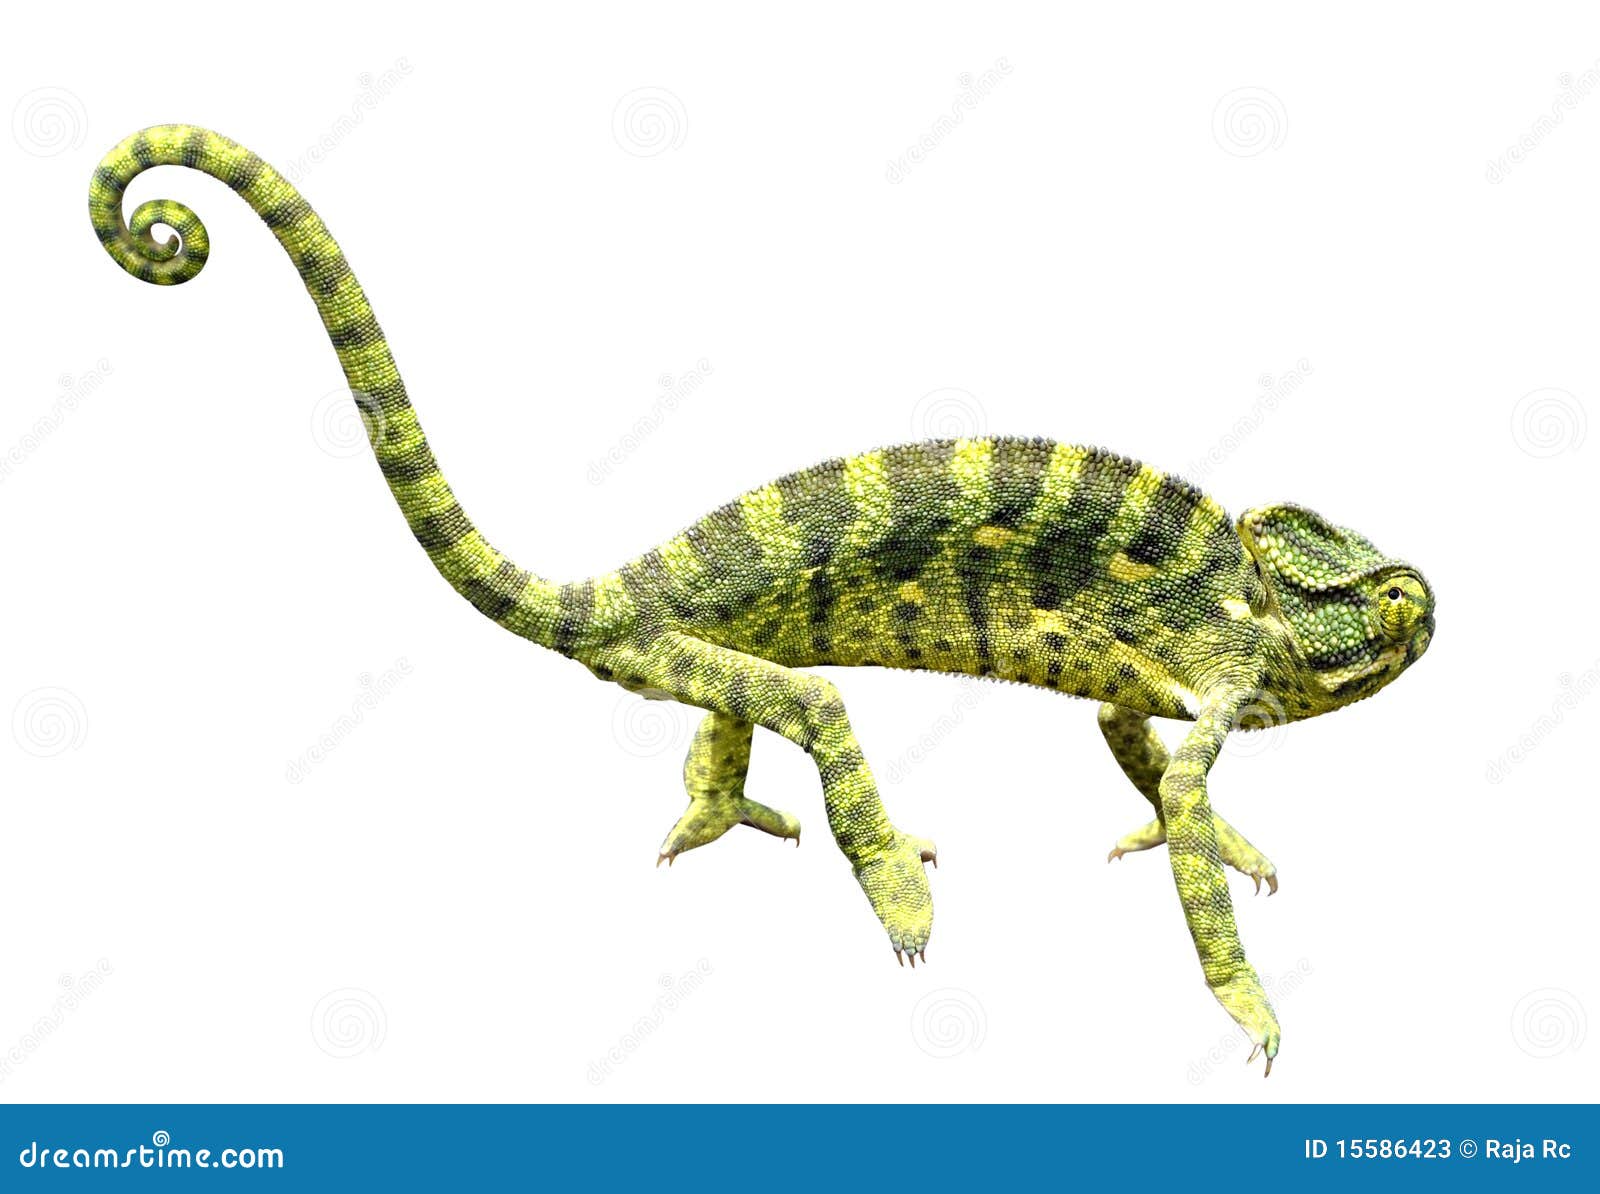 Chameleon Stock Photos - Image: 15586423